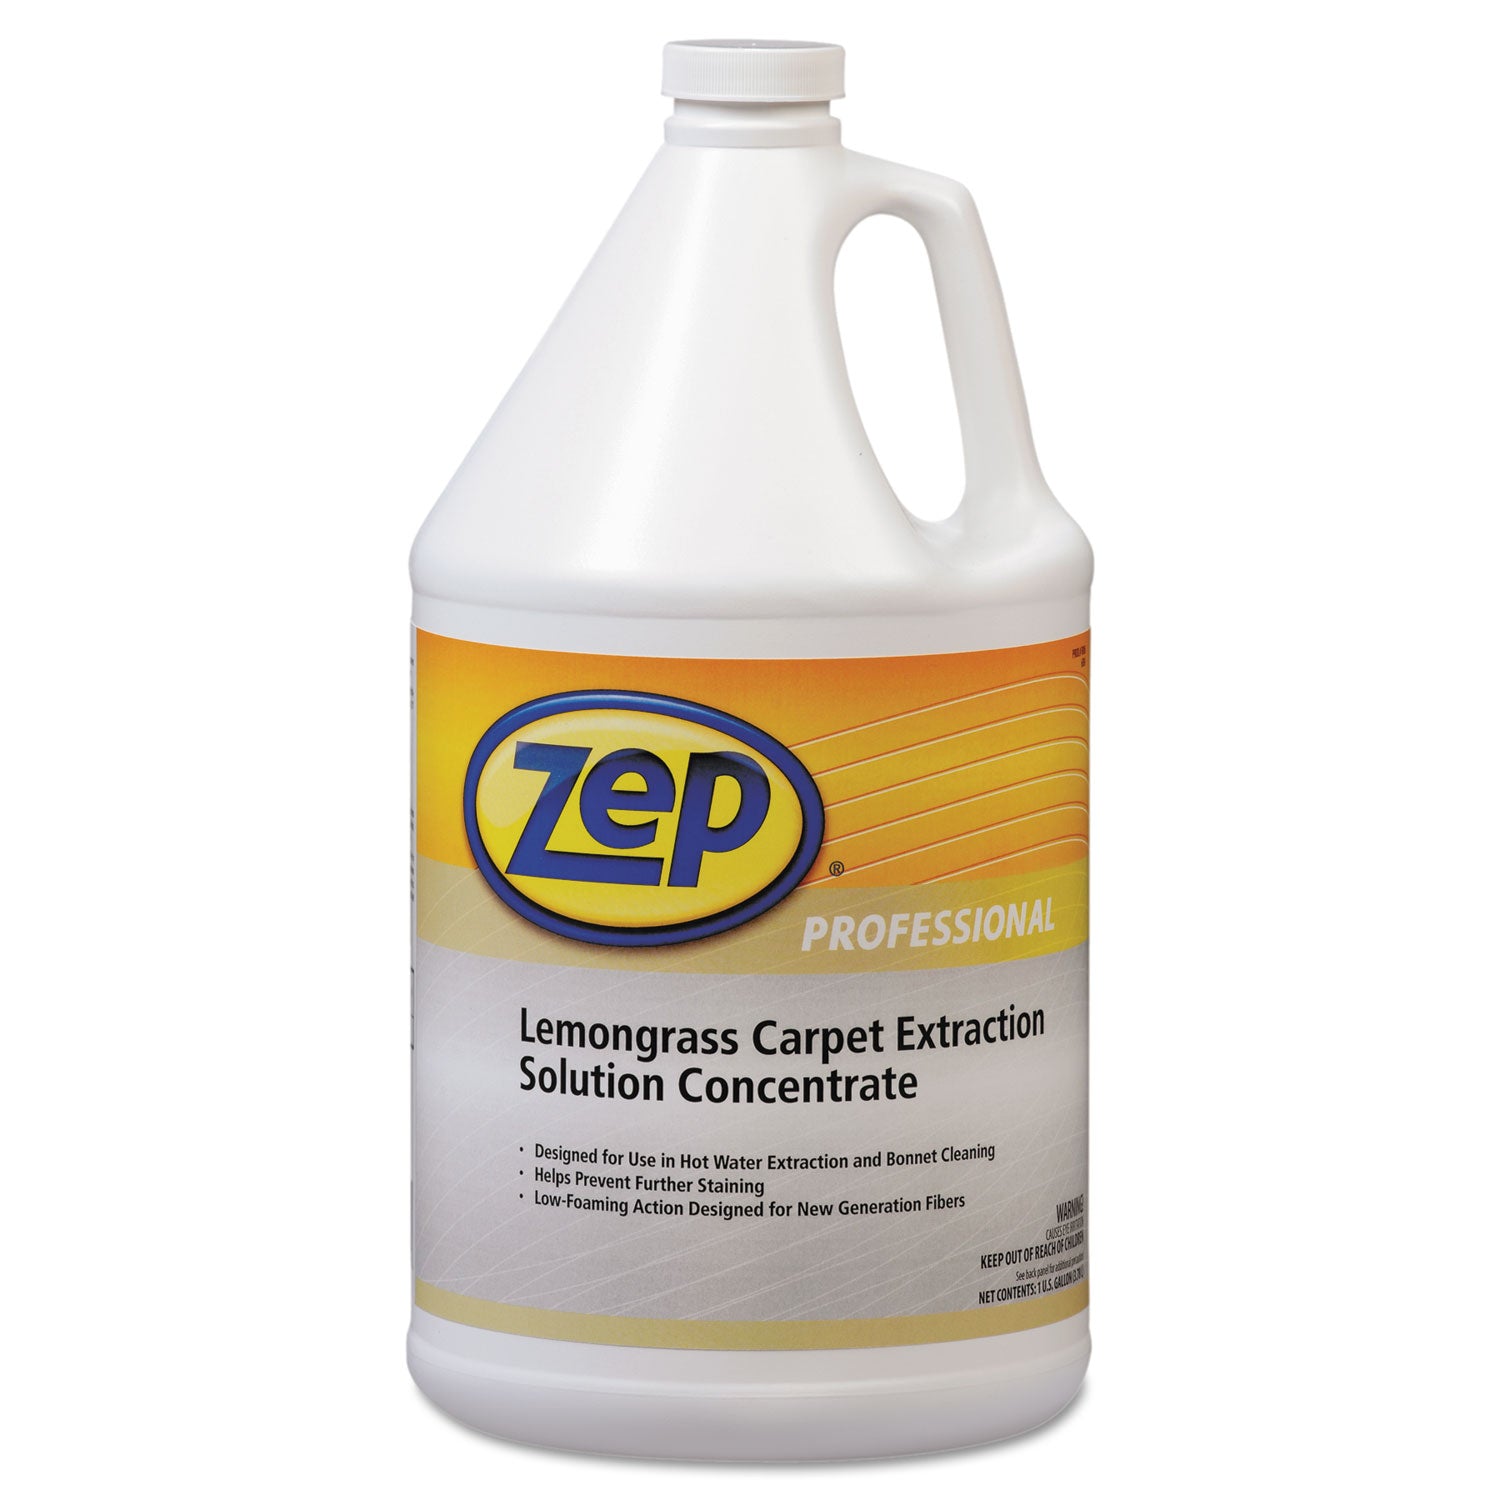 carpet-extraction-cleaner-lemongrass-1-gal-bottle-4-carton_zpp1041398 - 1